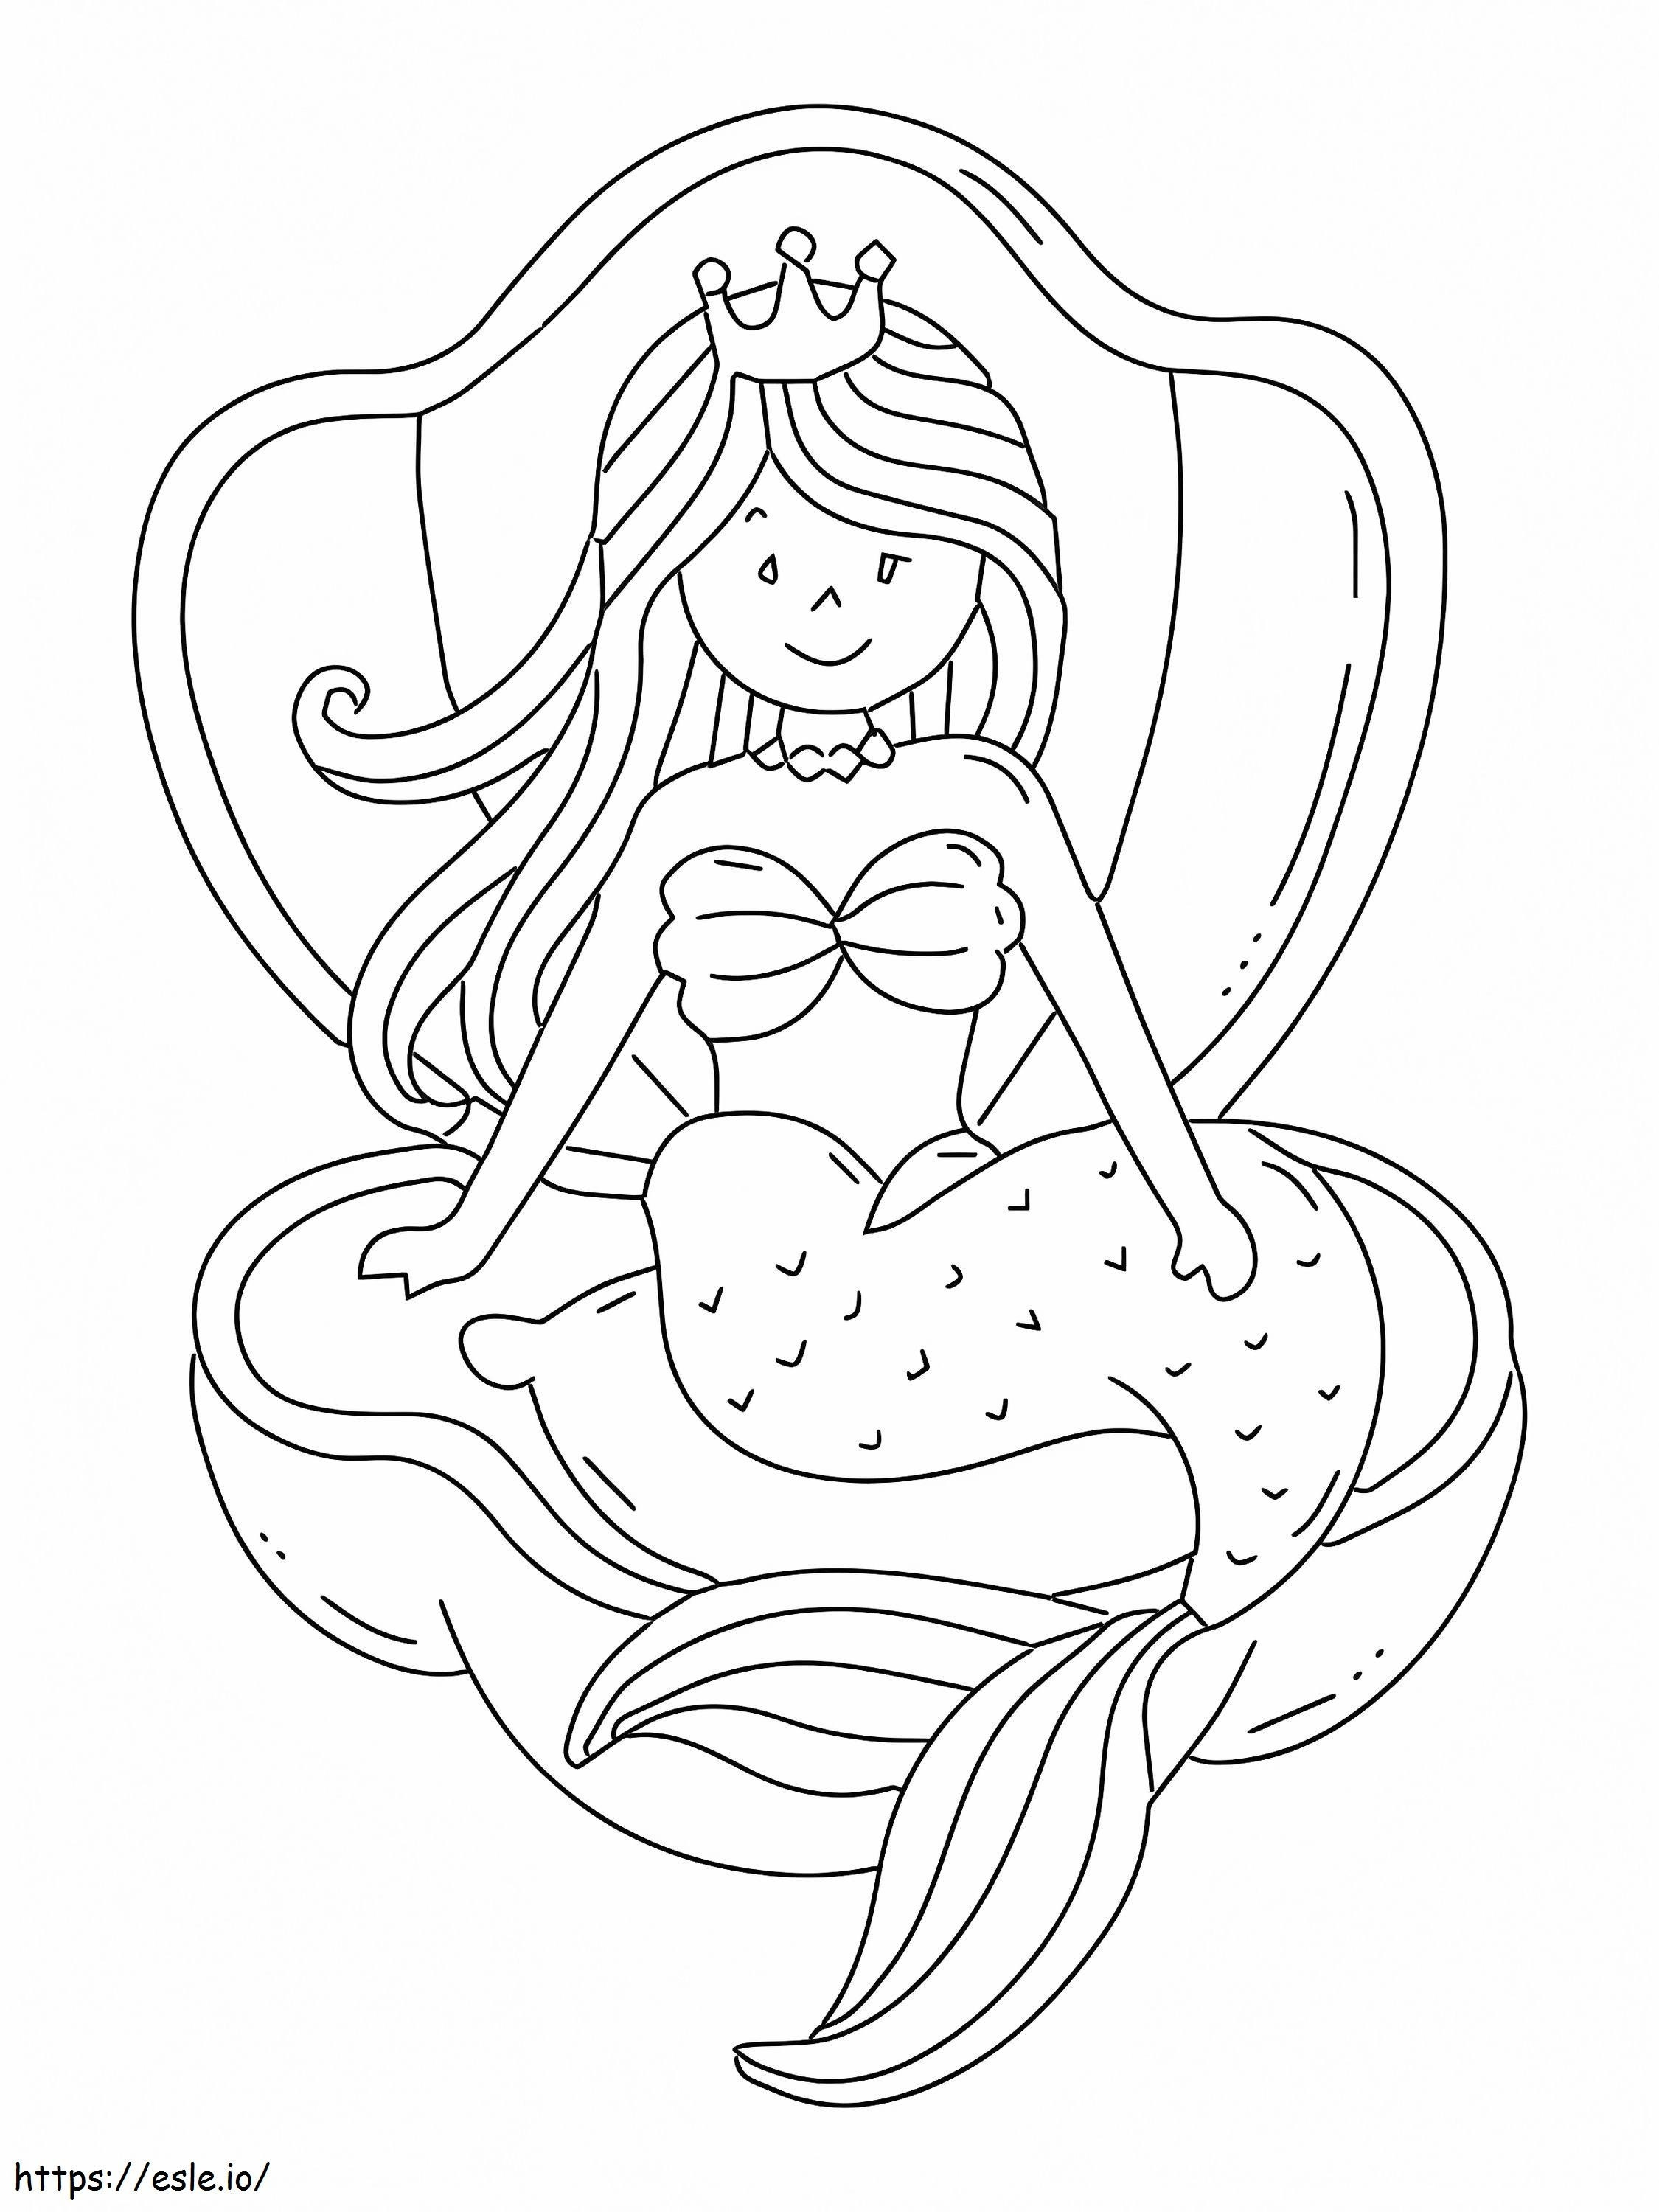 Prinzessin Meerjungfrau ausmalbilder